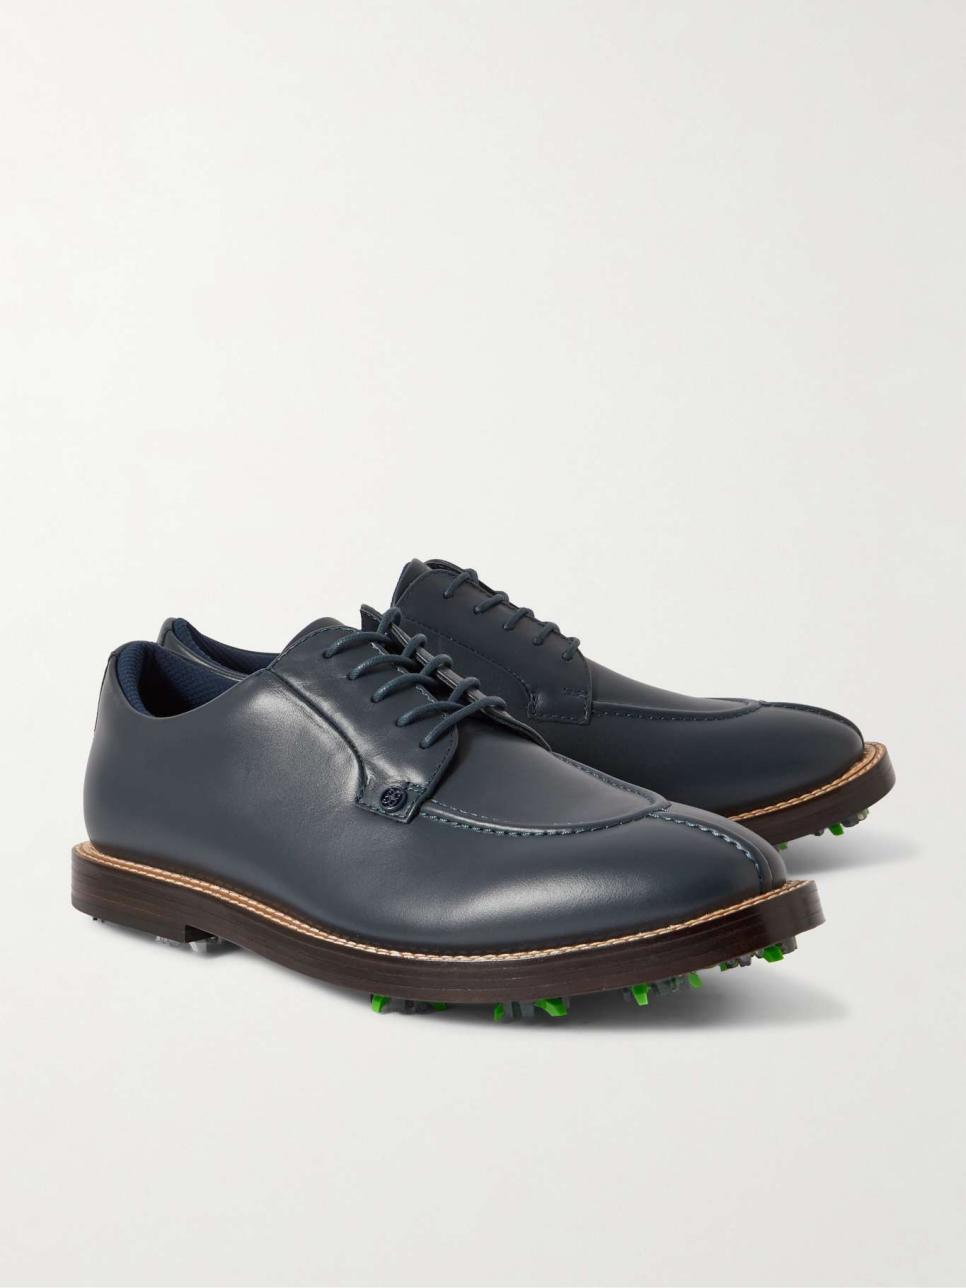 rx-mrpmr-p--gfore-leather-golf-shoes.jpeg